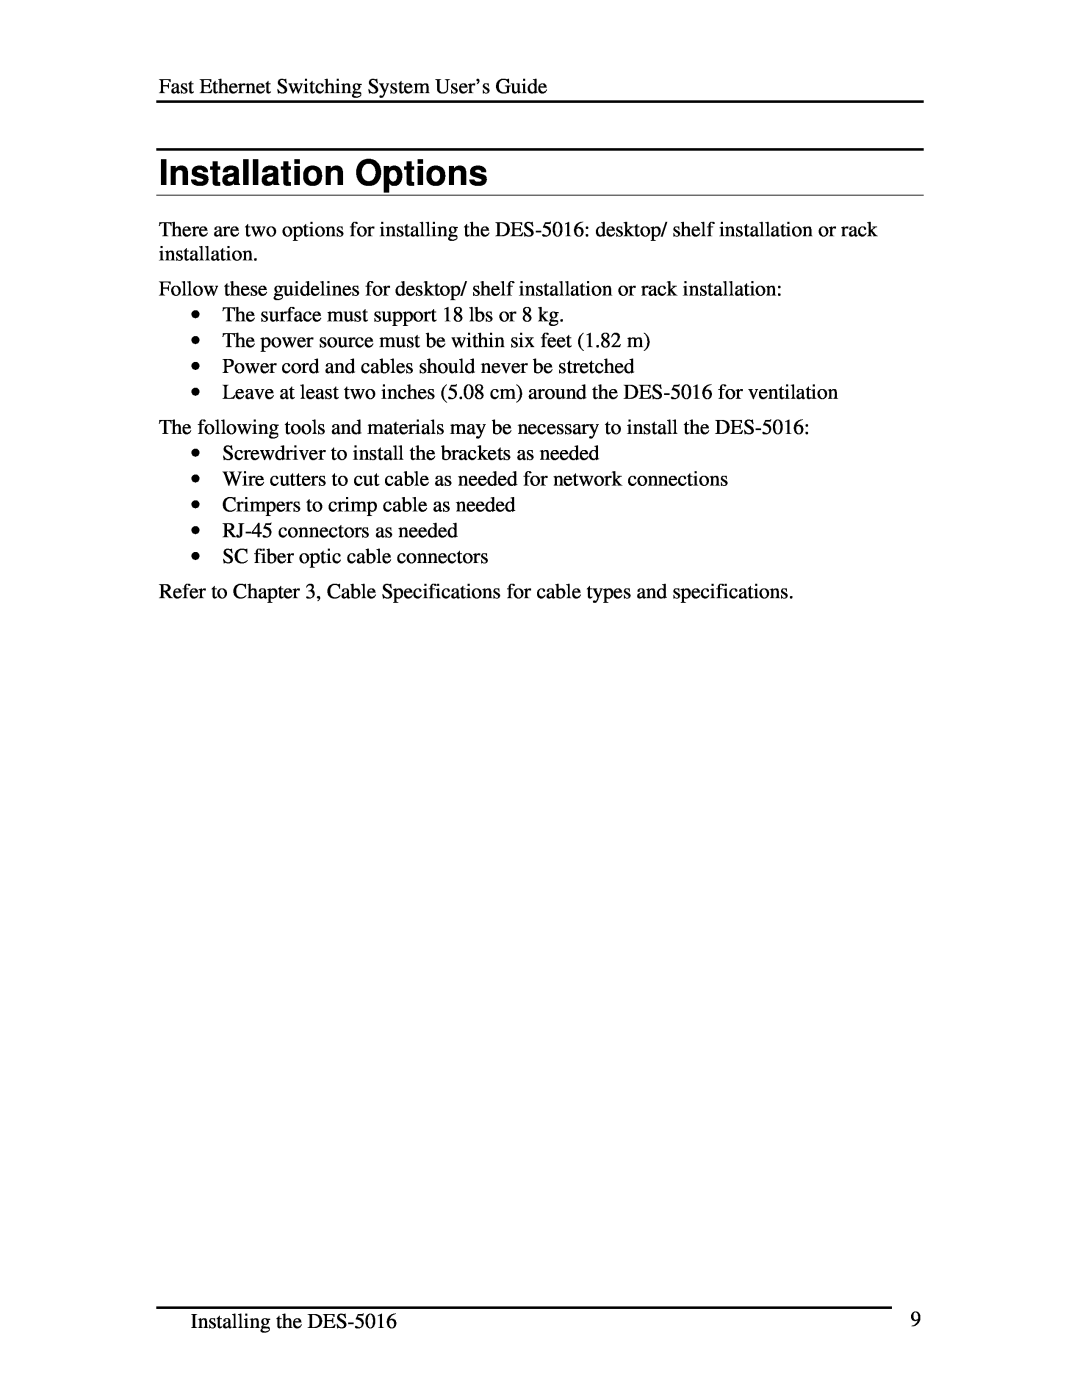 D-Link DES-5016 manual Installation Options 